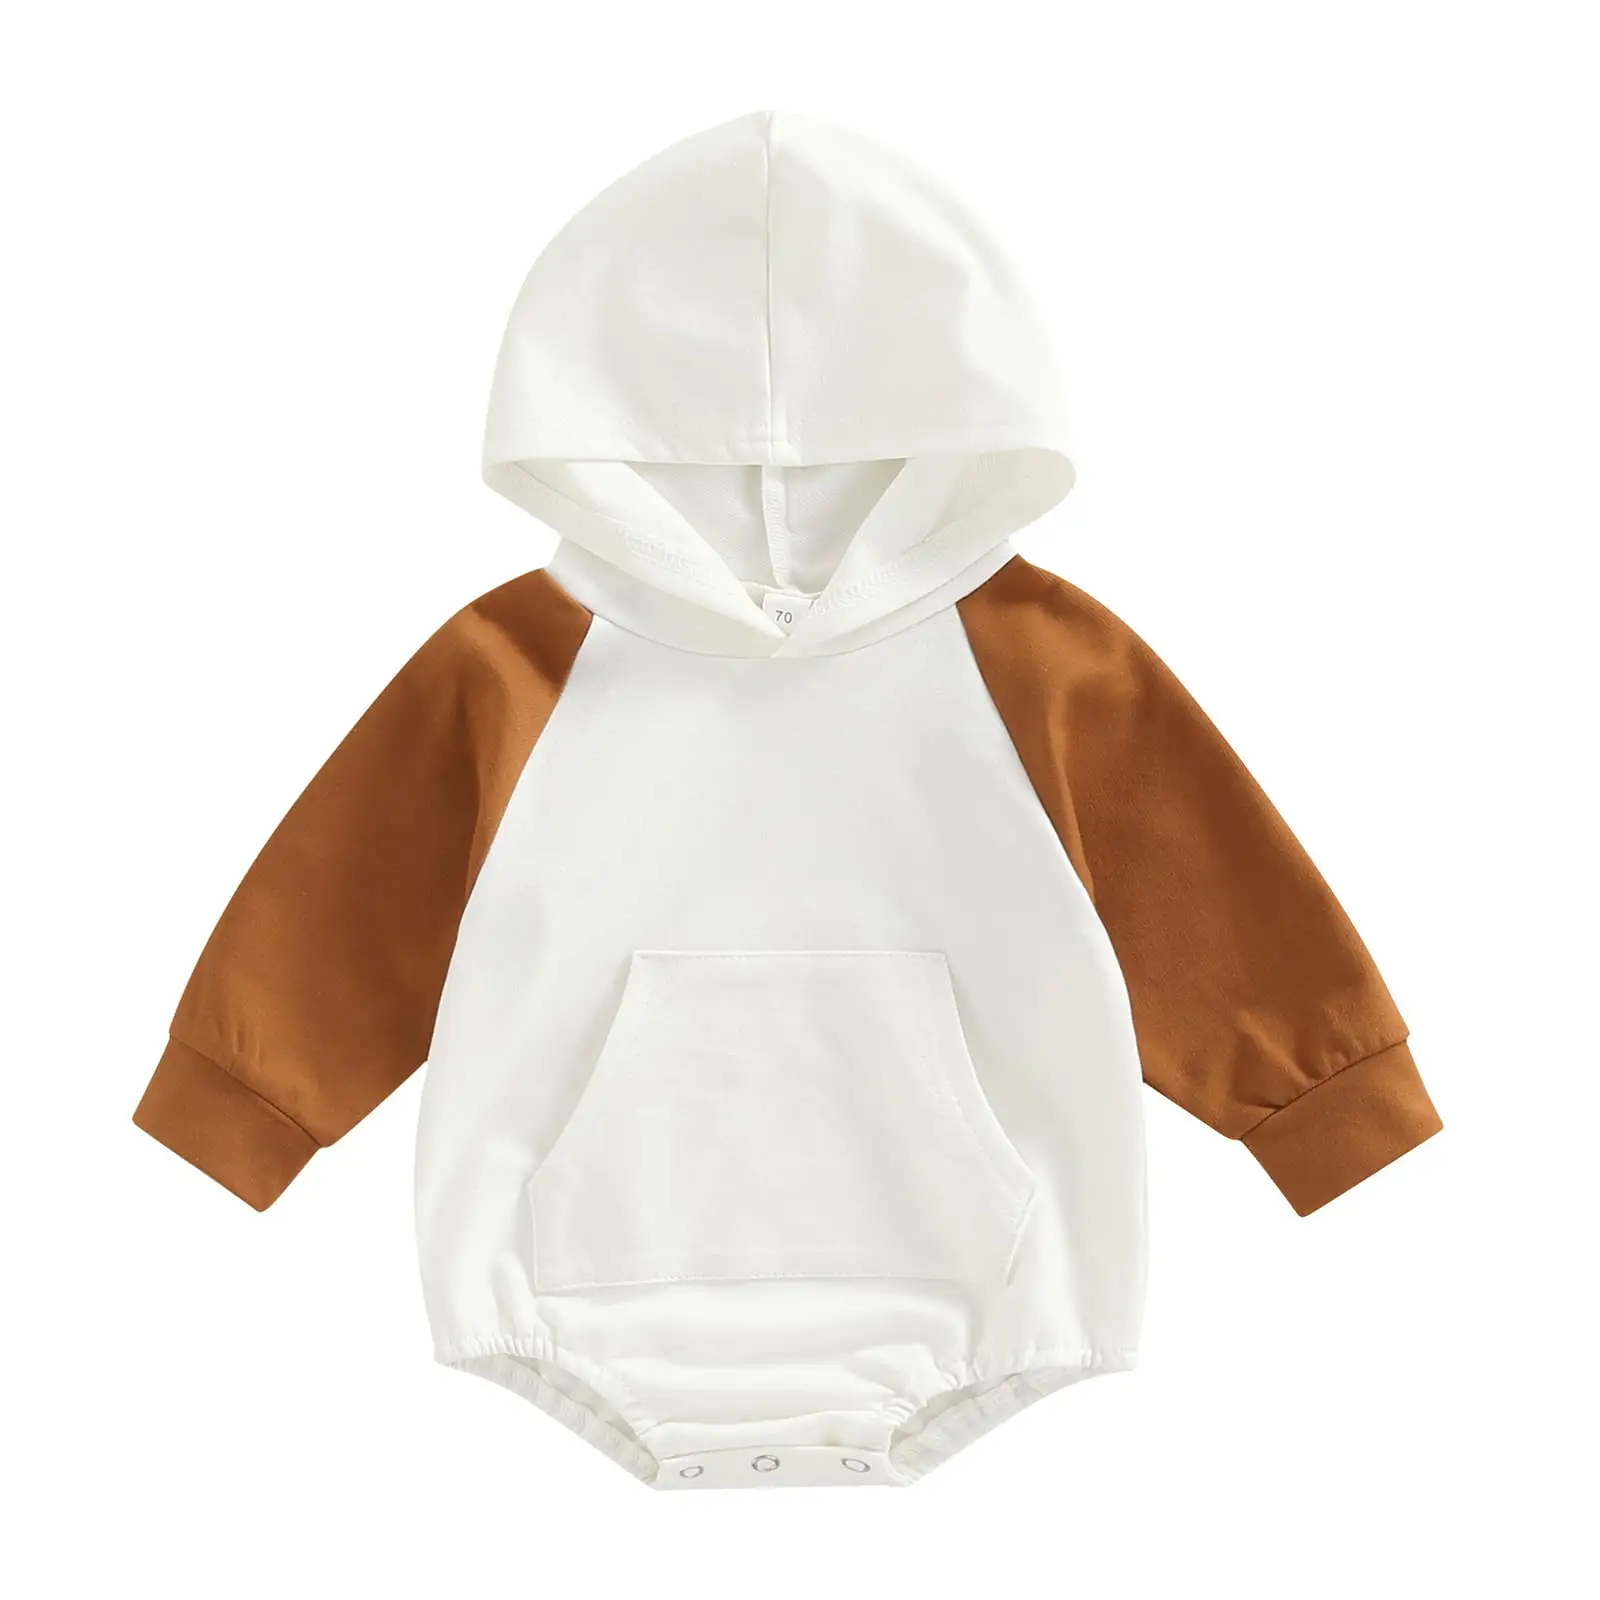 कस्टम कॉटन लंबी आस्तीन बेबी गर्ल बॉय हुडी रोम्पर बॉडीसूट उच्च गुणवत्ता वाली हुडी पुलओवर स्वेटशर्ट बेबी विंटर रोम्पर